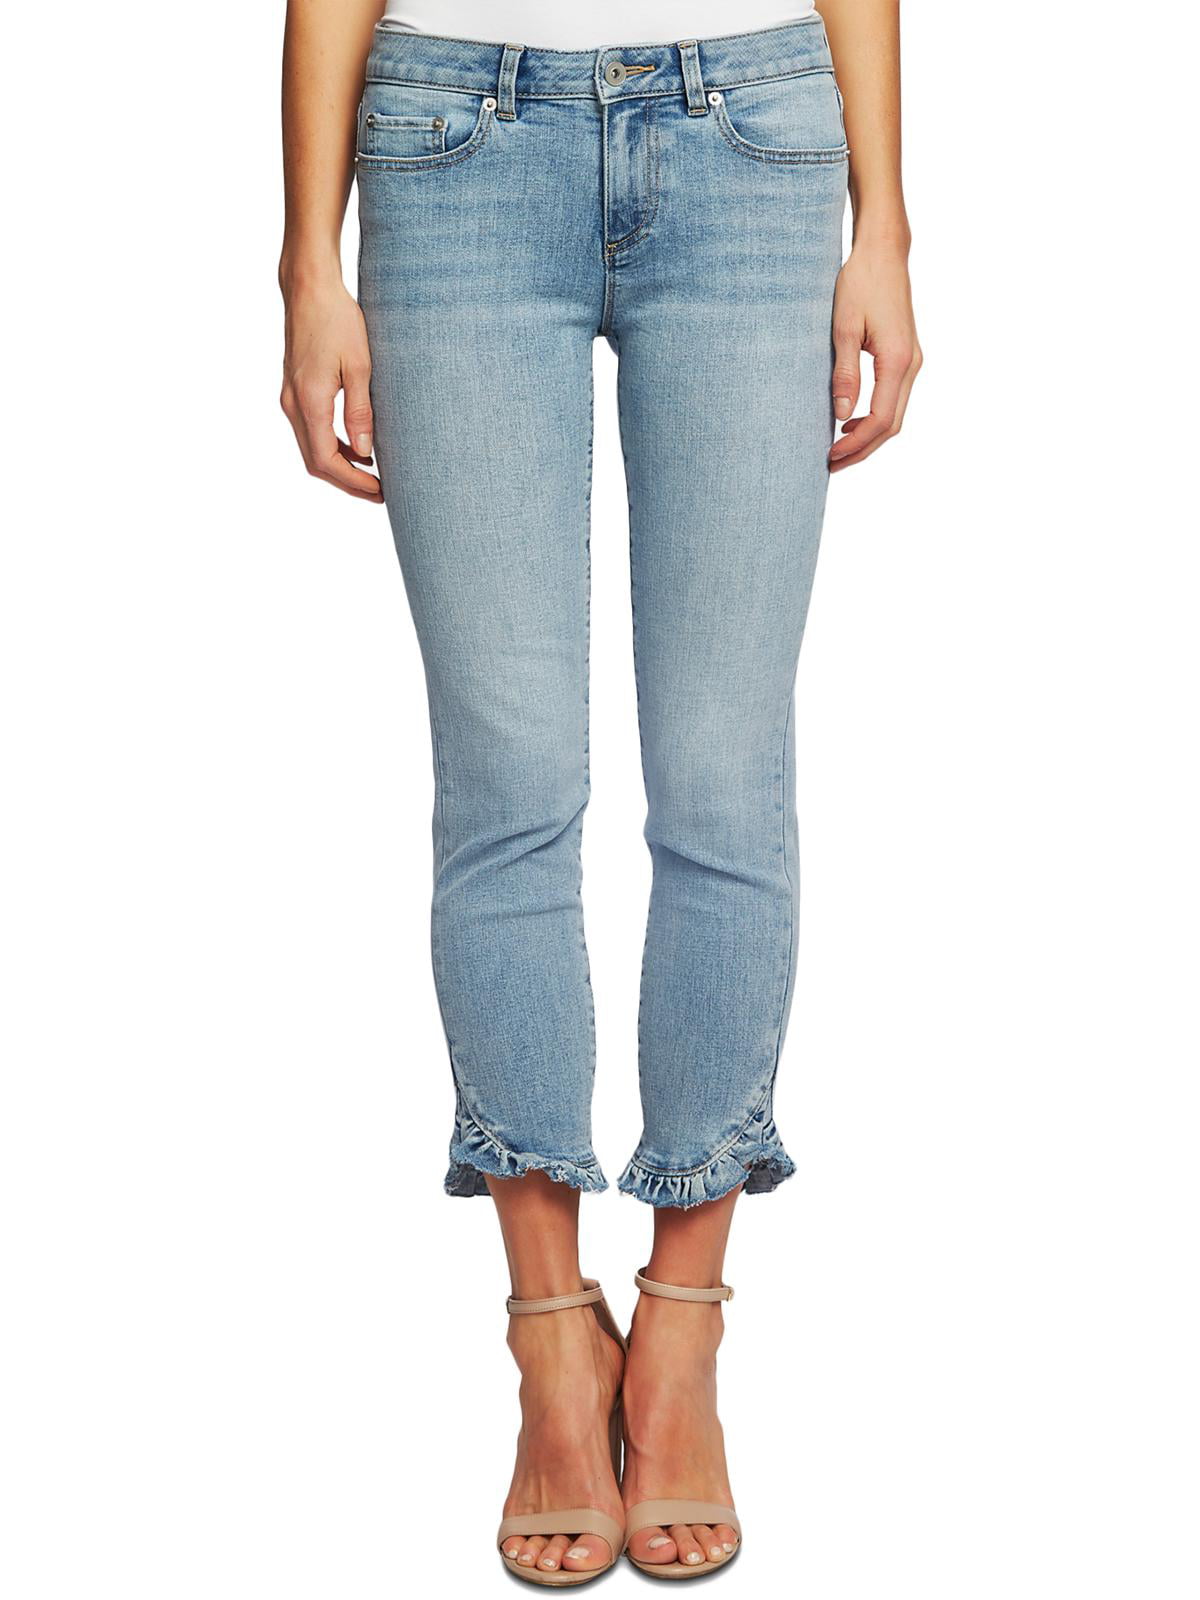 CeCe - CeCe Womens Denim High Rise Skinny Jeans - Walmart.com - Walmart.com